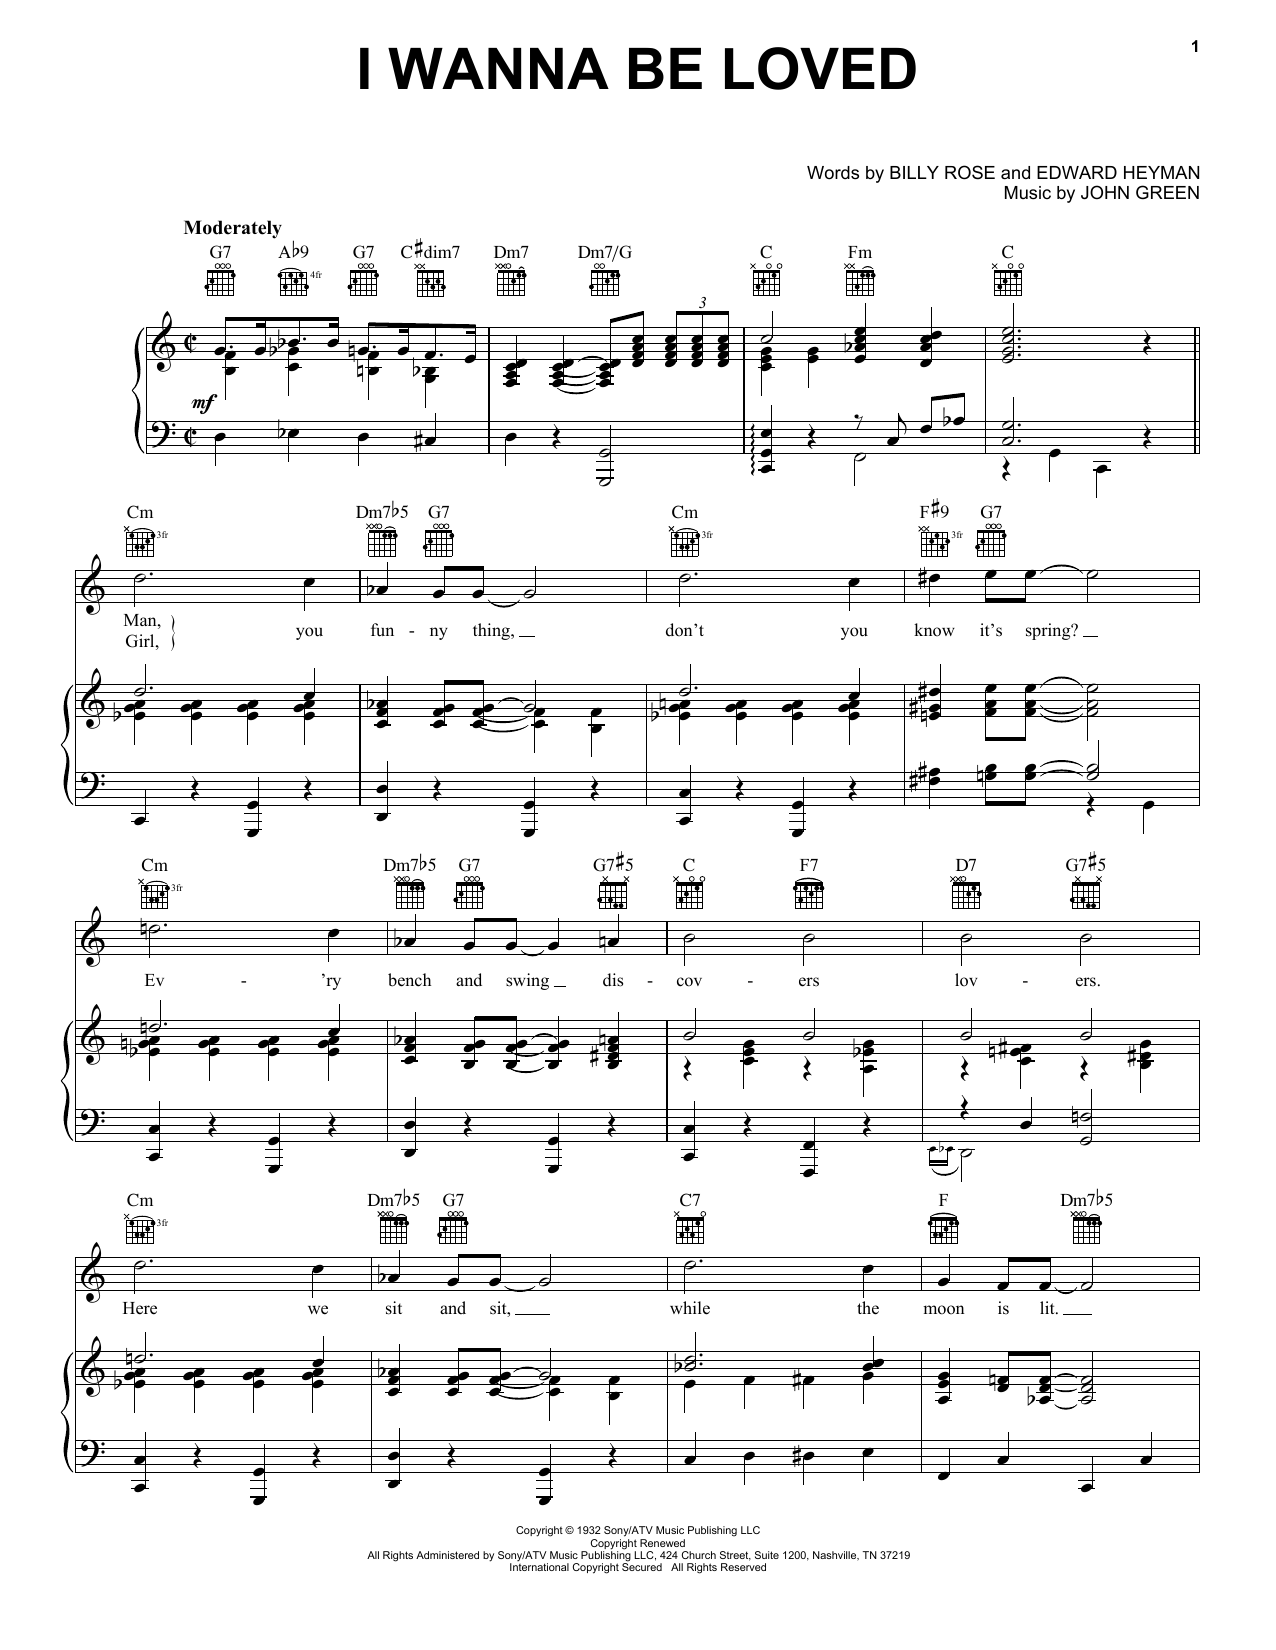 Dinah Washington I Wanna Be Loved Sheet Music Notes & Chords for Piano, Vocal & Guitar (Right-Hand Melody) - Download or Print PDF